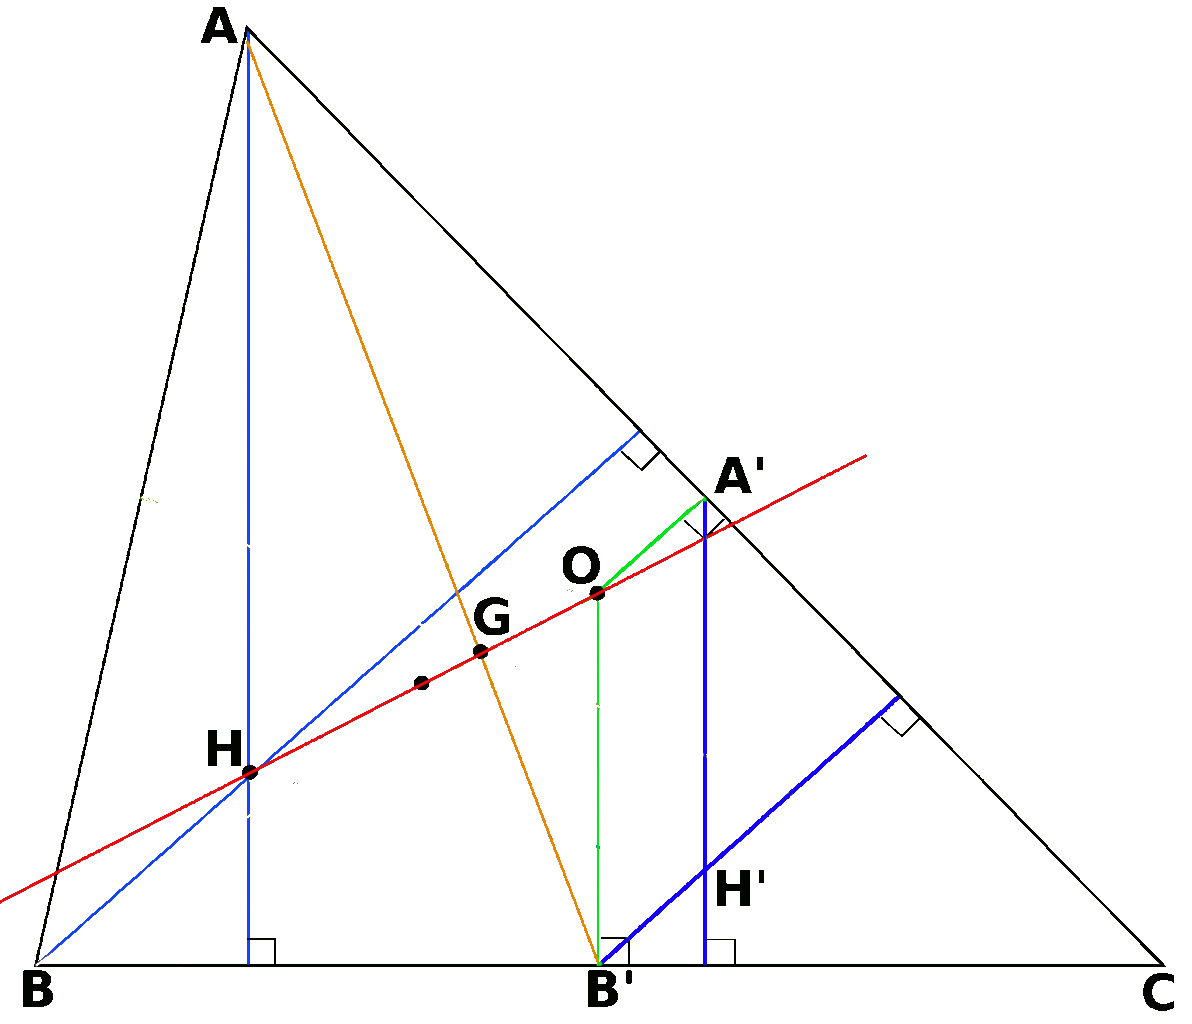 File:Euler line.gif - Wikimedia Commons